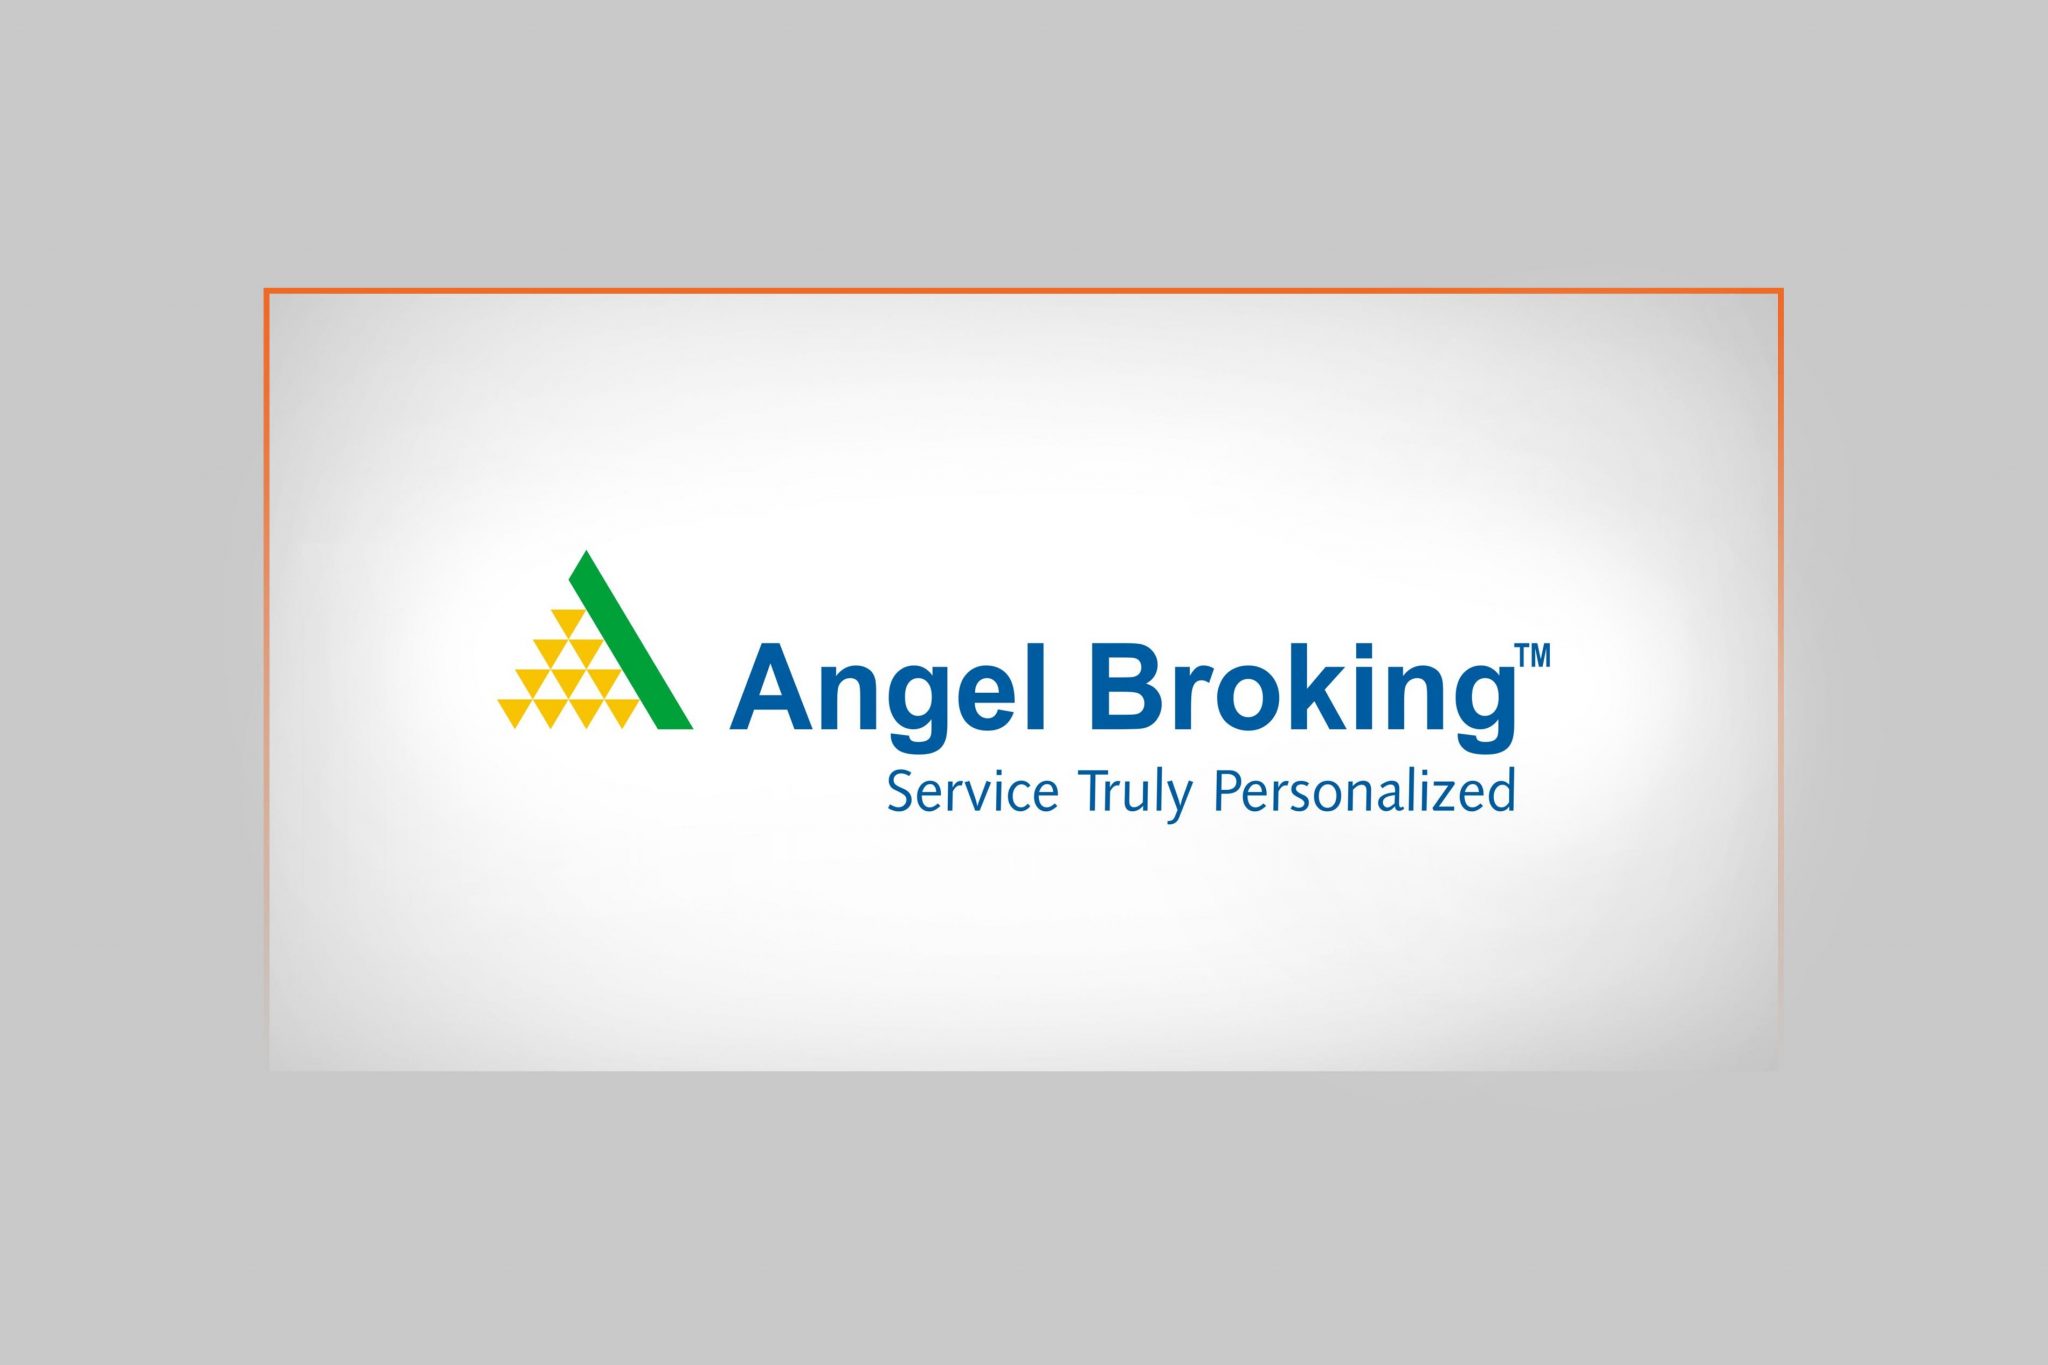 Angel Broking Demat Account - Complete Review